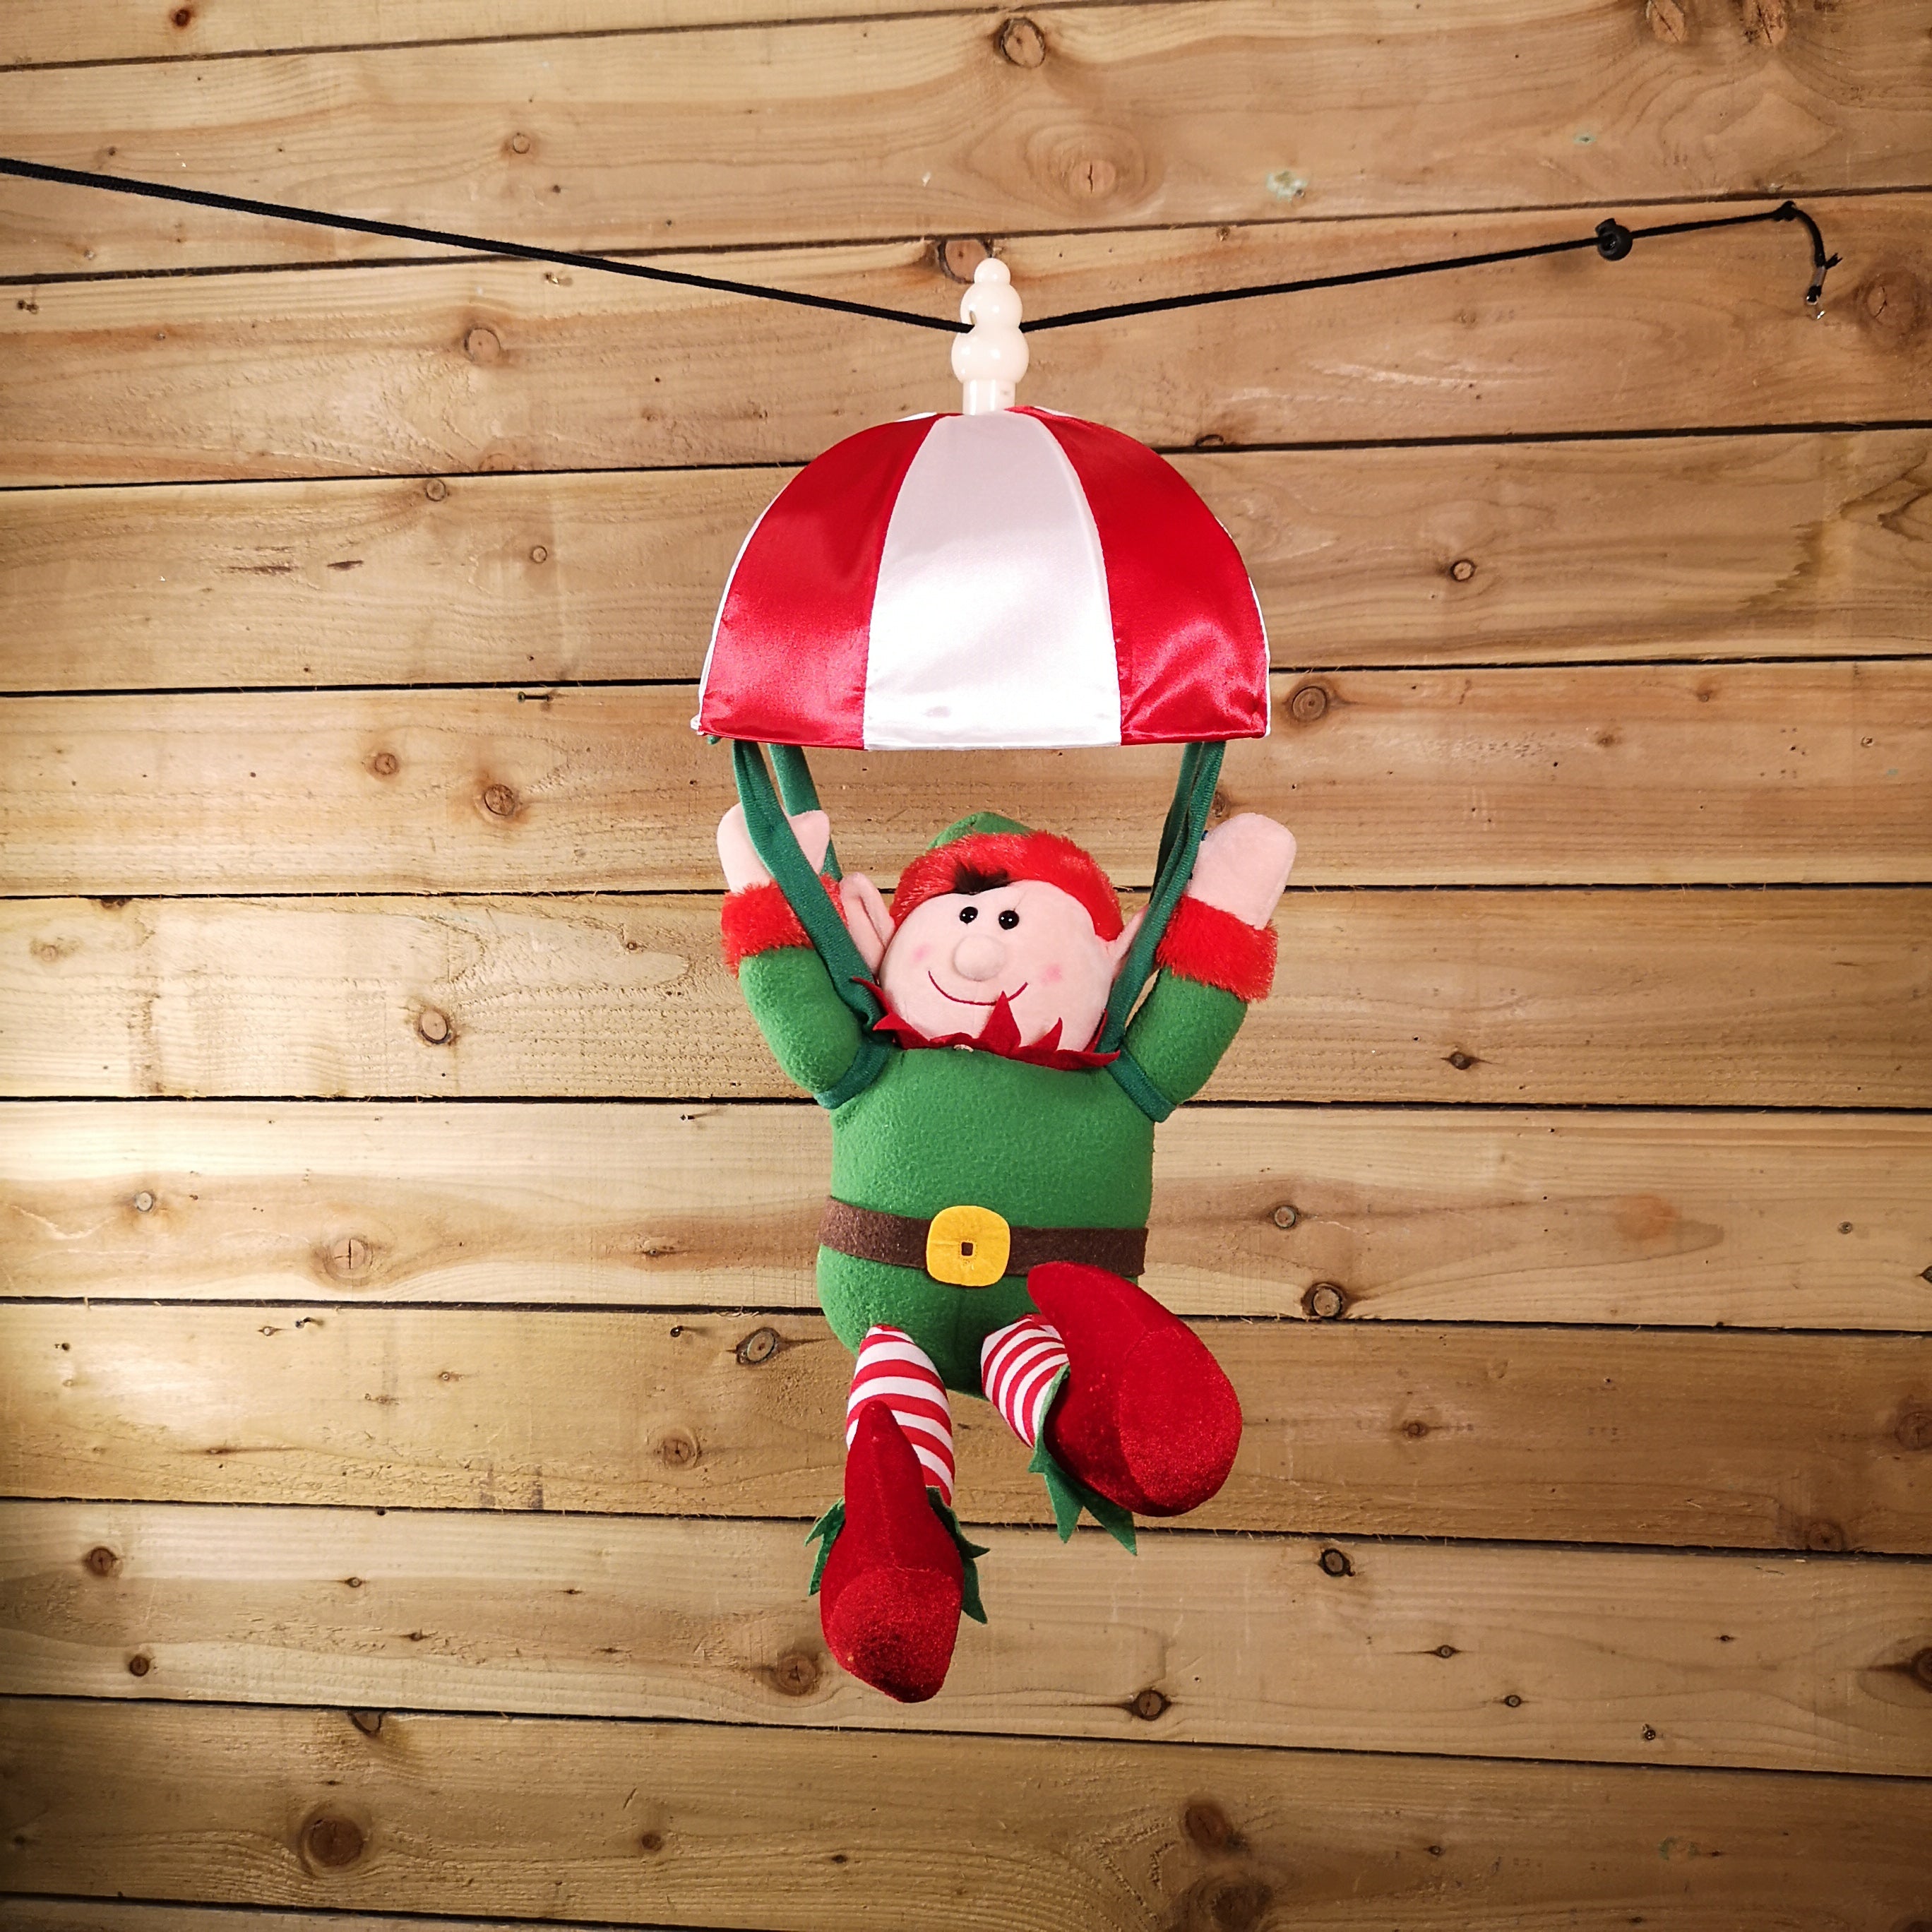 Premier Christmas Animated & Musical Kicking Leg Parachuting Elf